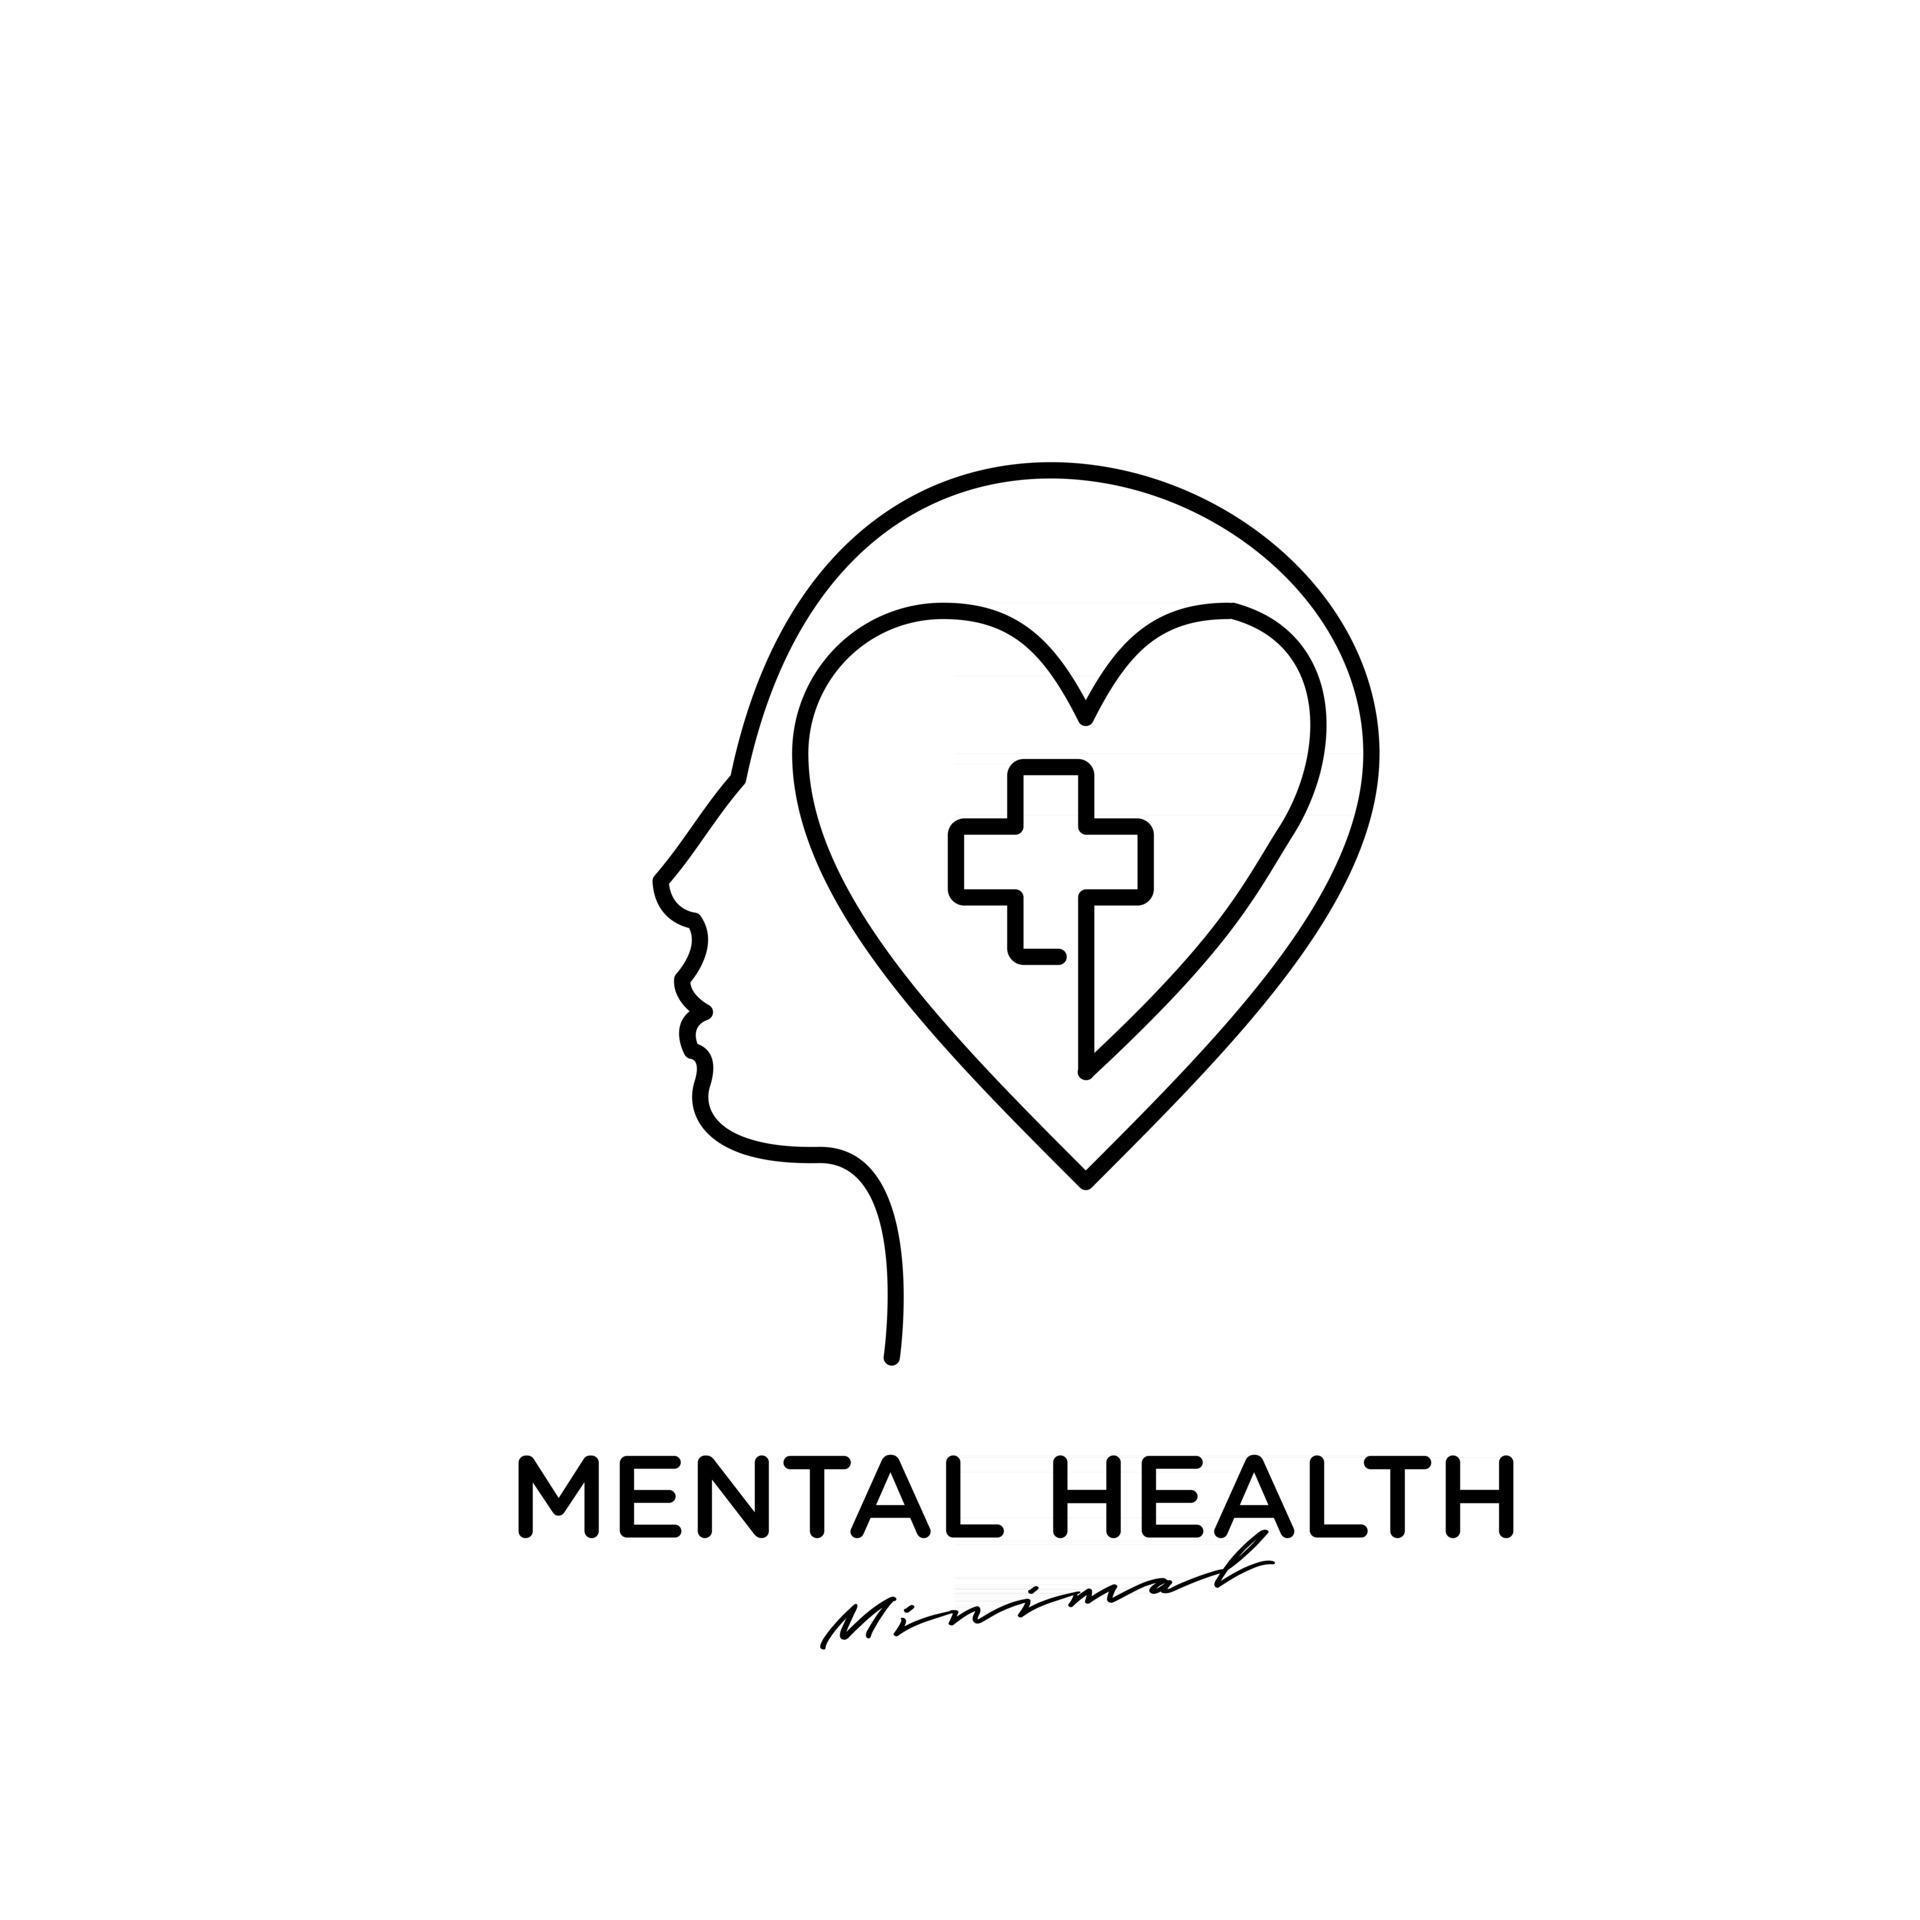 Mental Health Logos And Designs